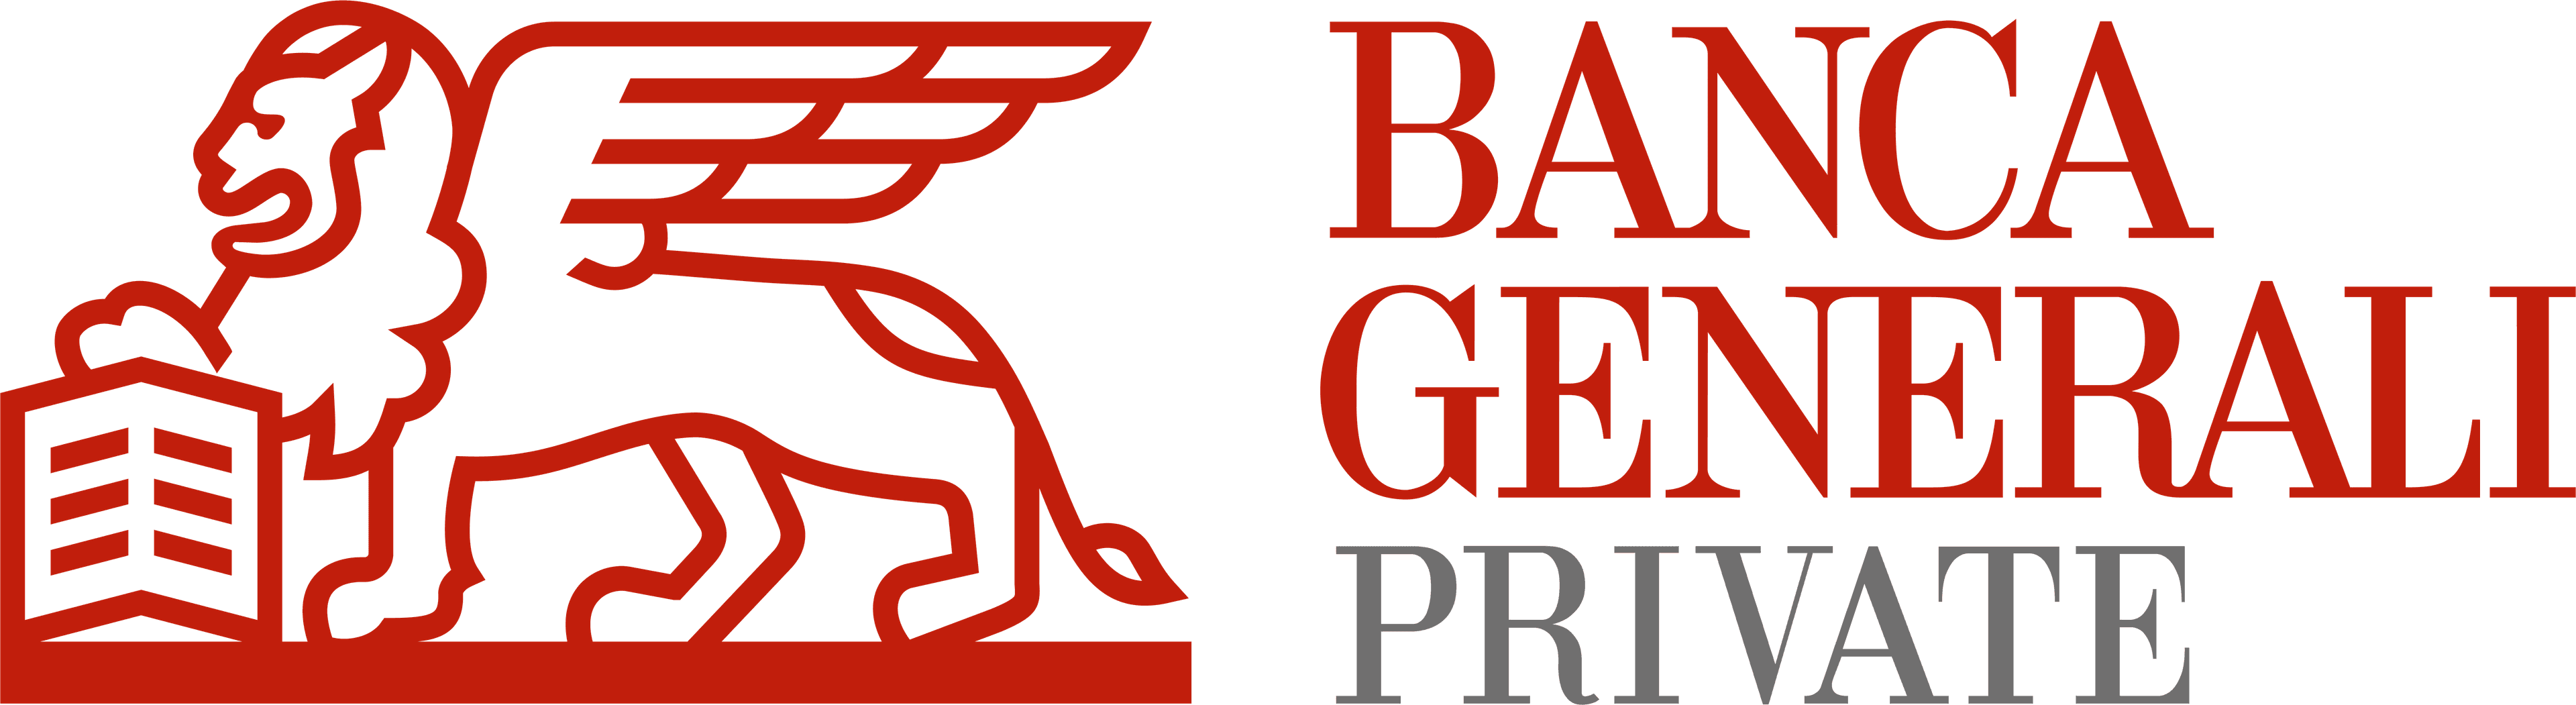 logo Banca Generali Private